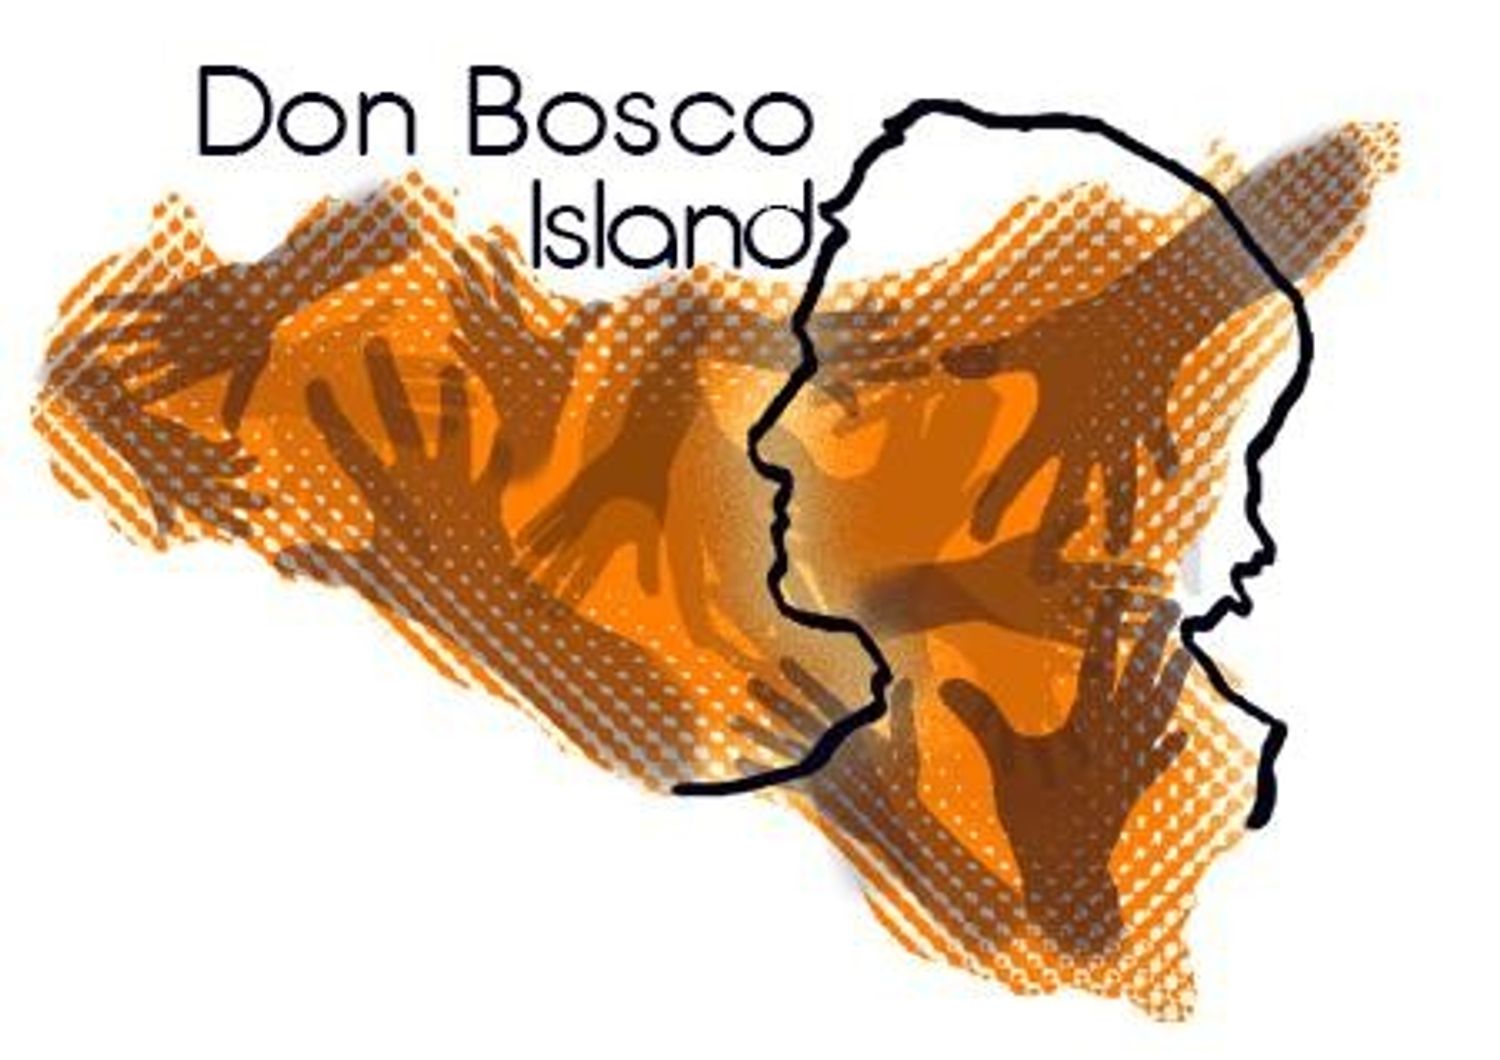 Don Bosco Island